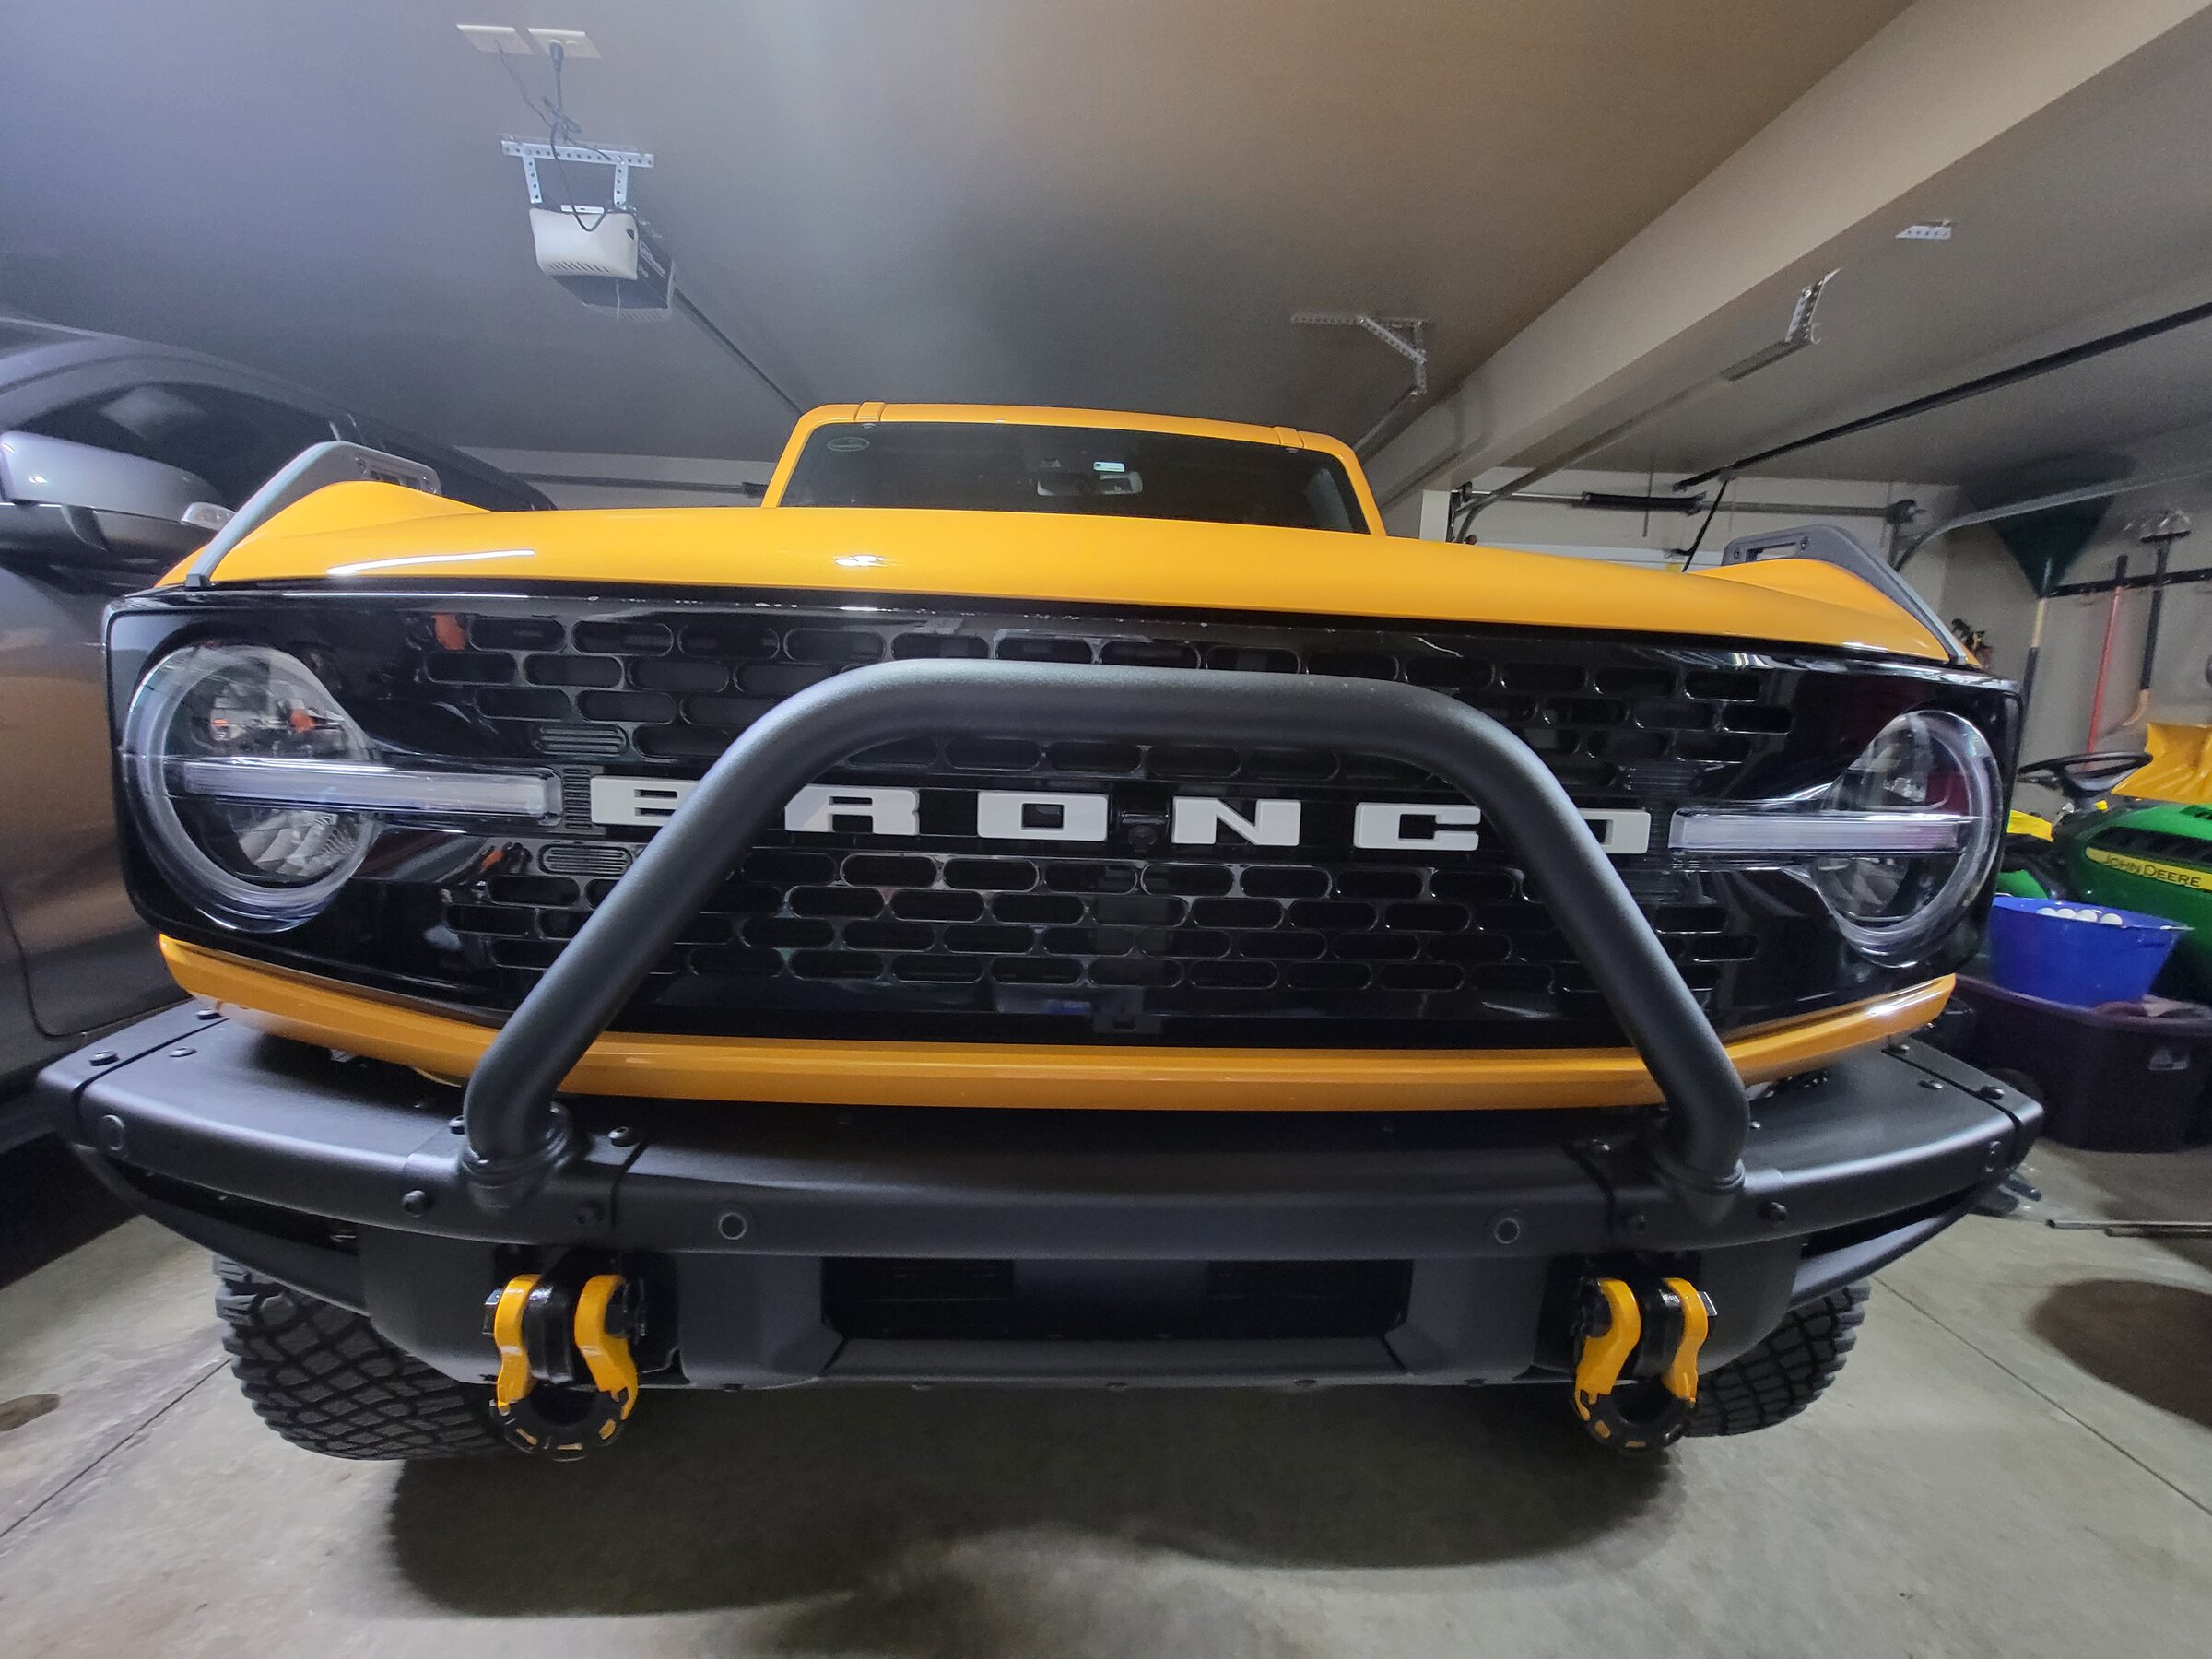 Ford Bronco Cyber Orange vs Yellow 20220217_092420